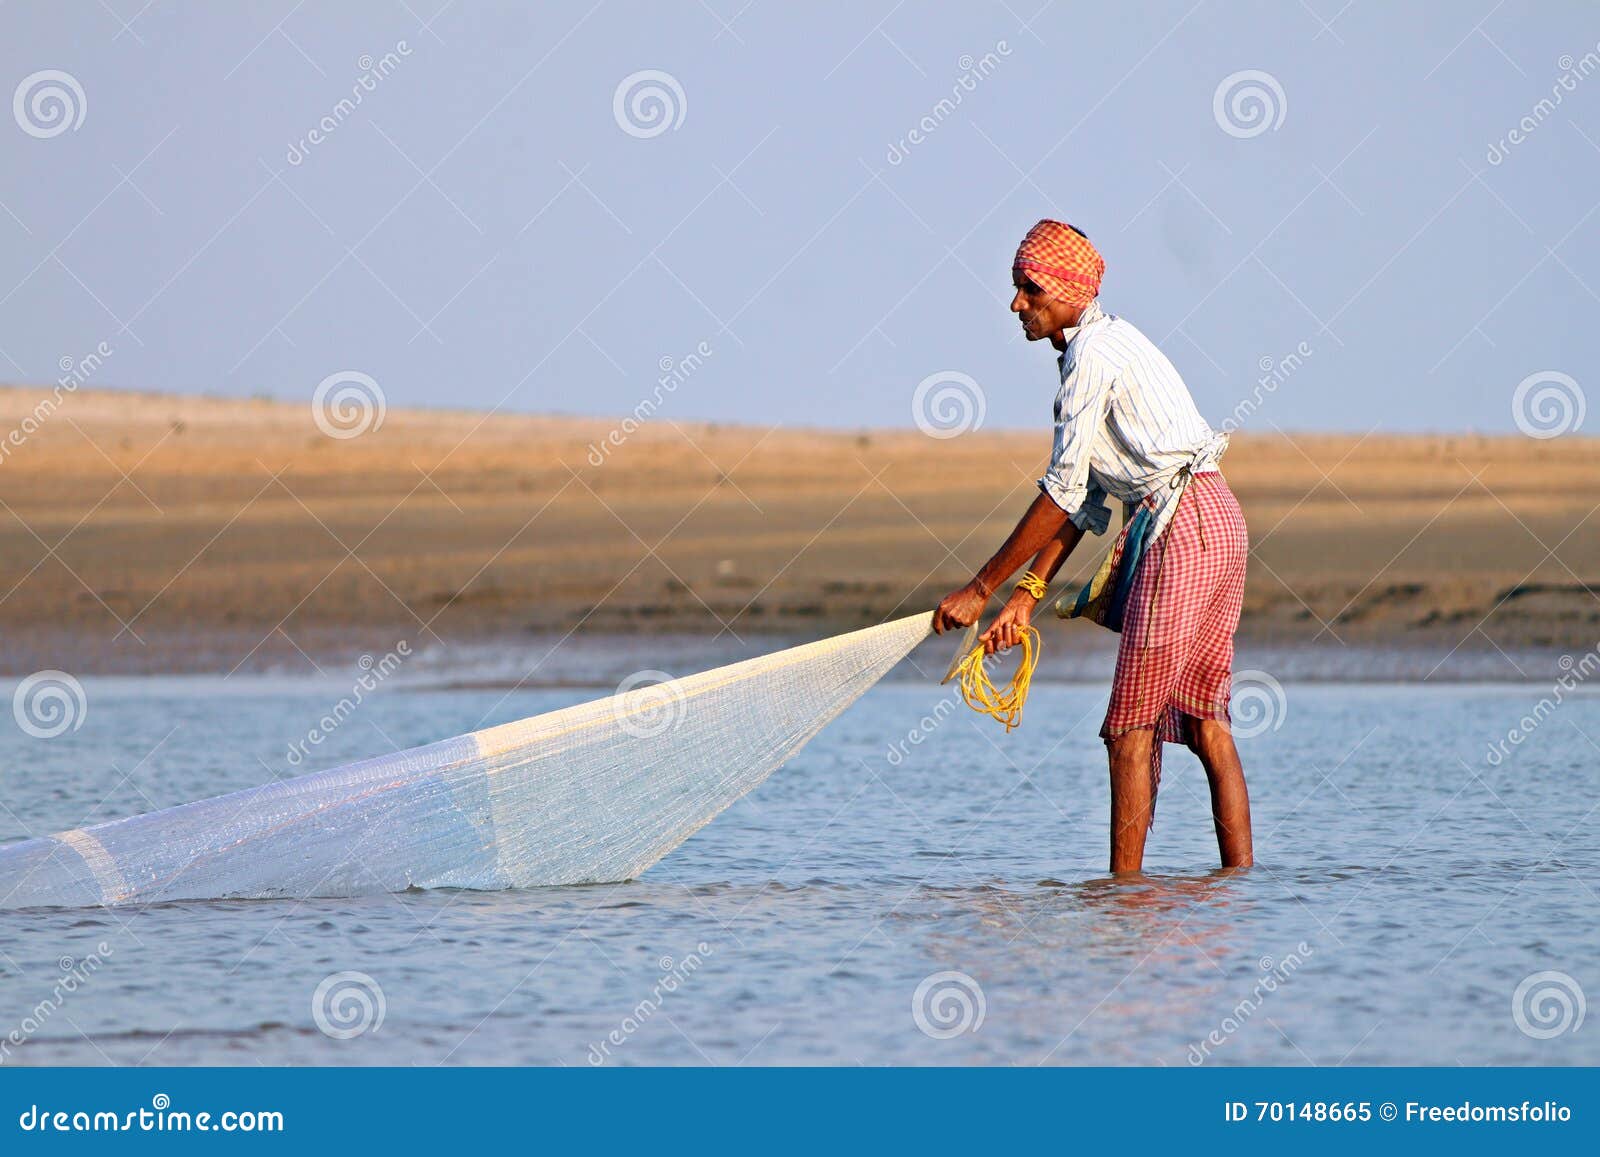 https://thumbs.dreamstime.com/z/fisherman-catches-fish-traditional-hand-net-india-subarna-rekha-river-70148665.jpg